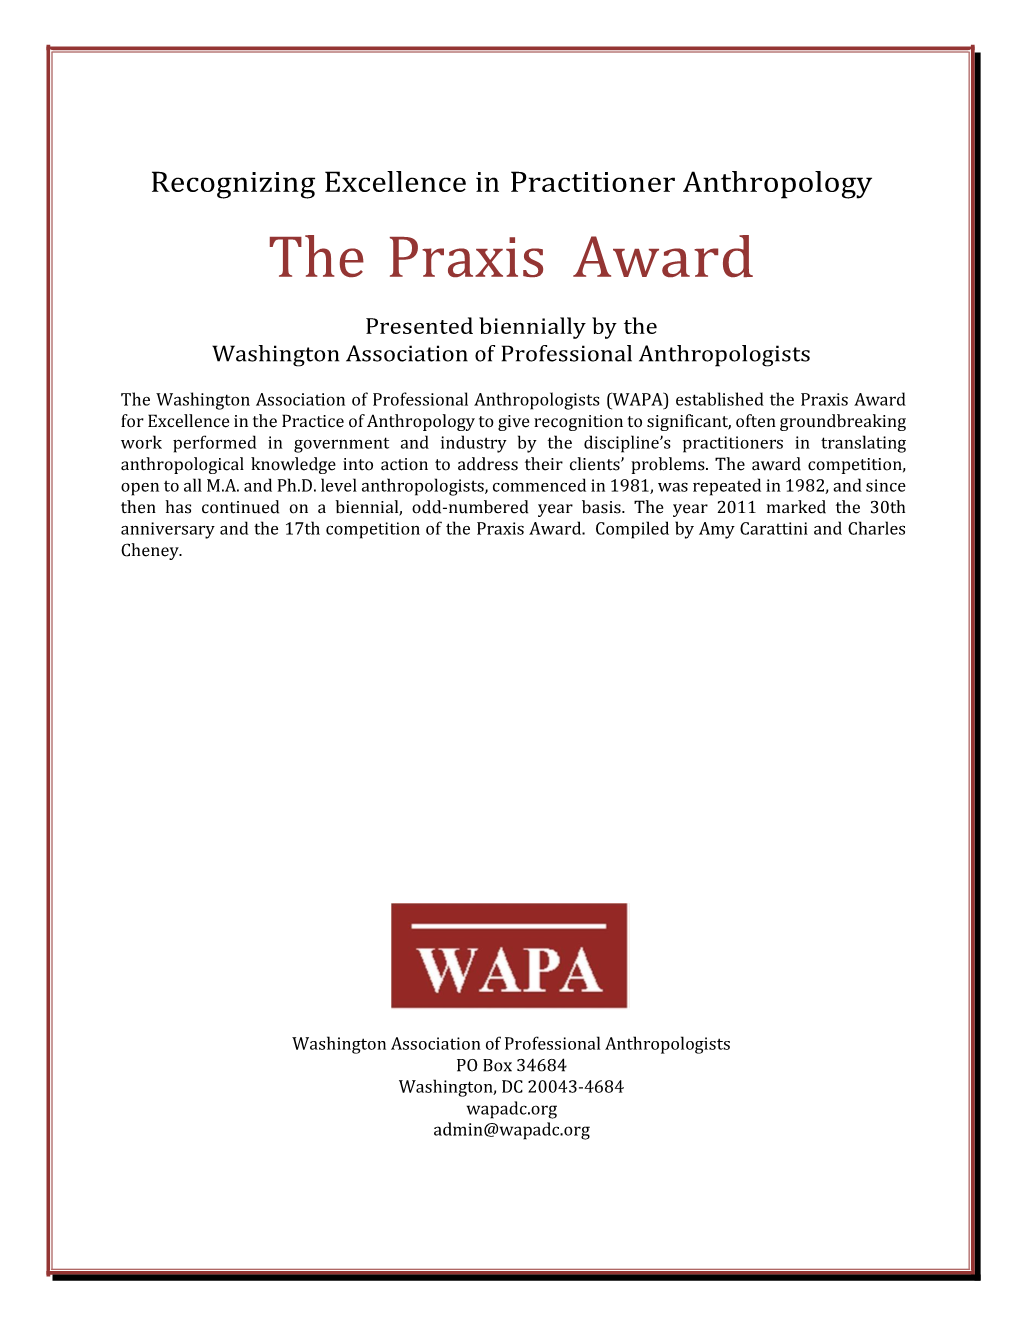 The Praxis Award